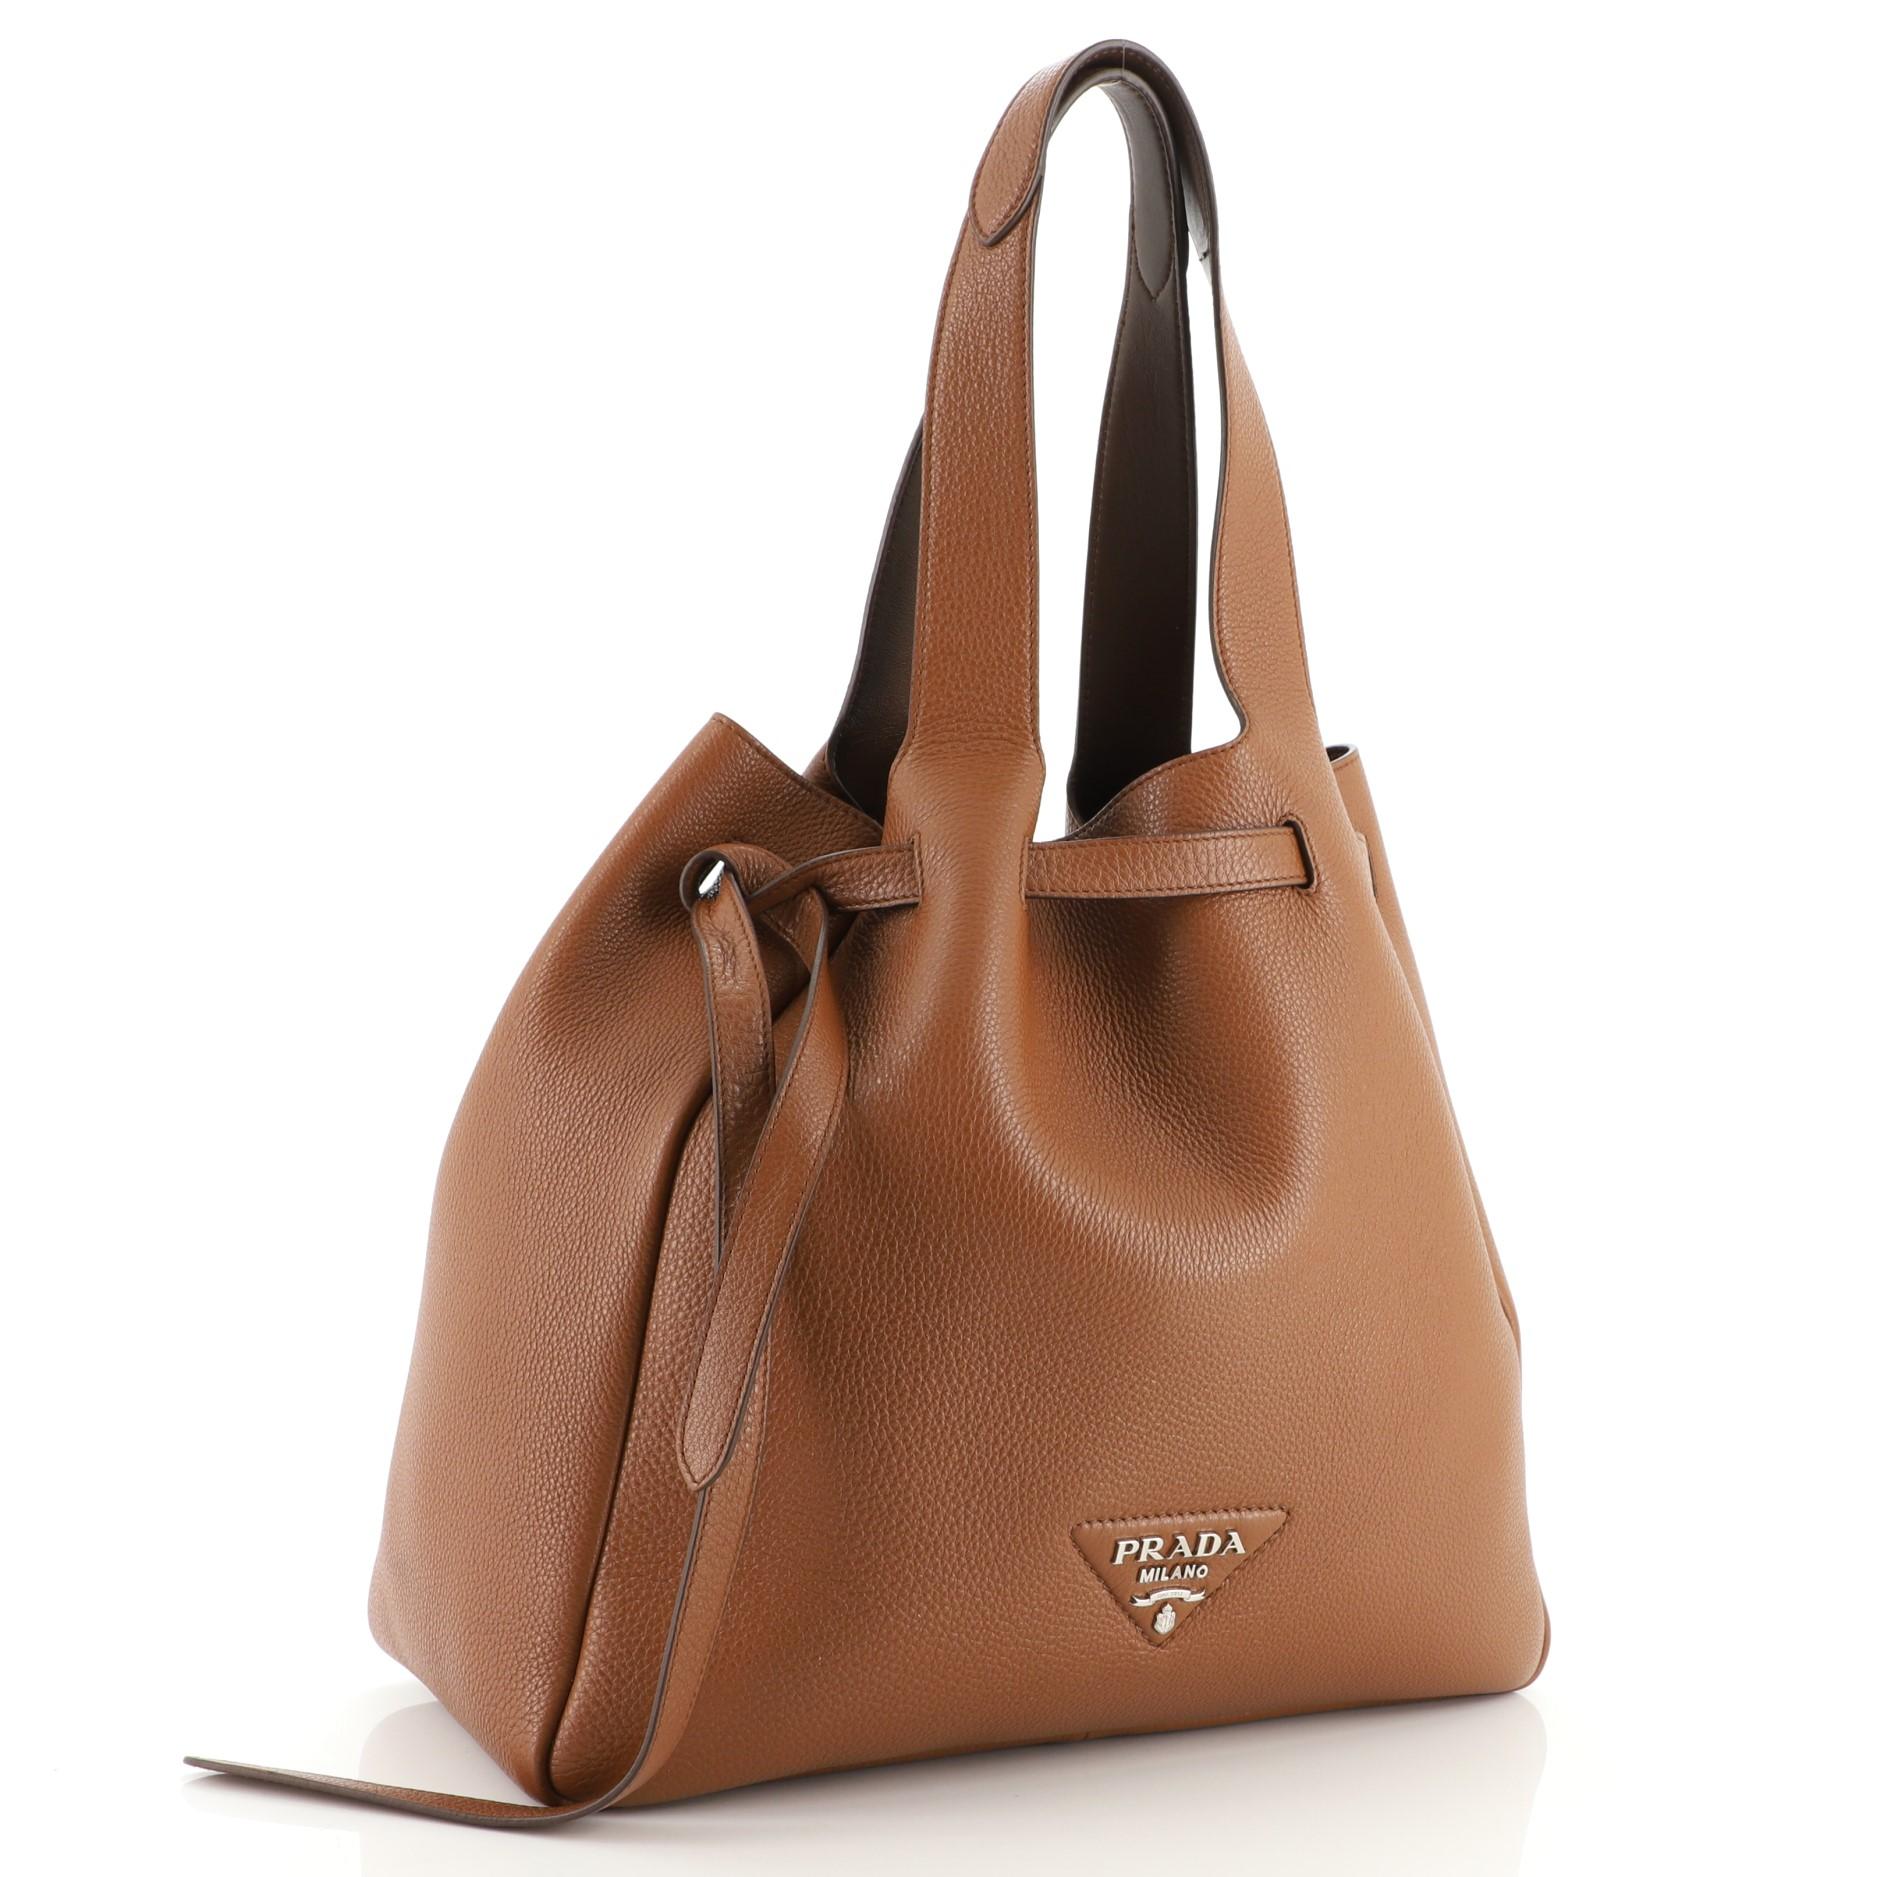 prada dynamique leather handbag